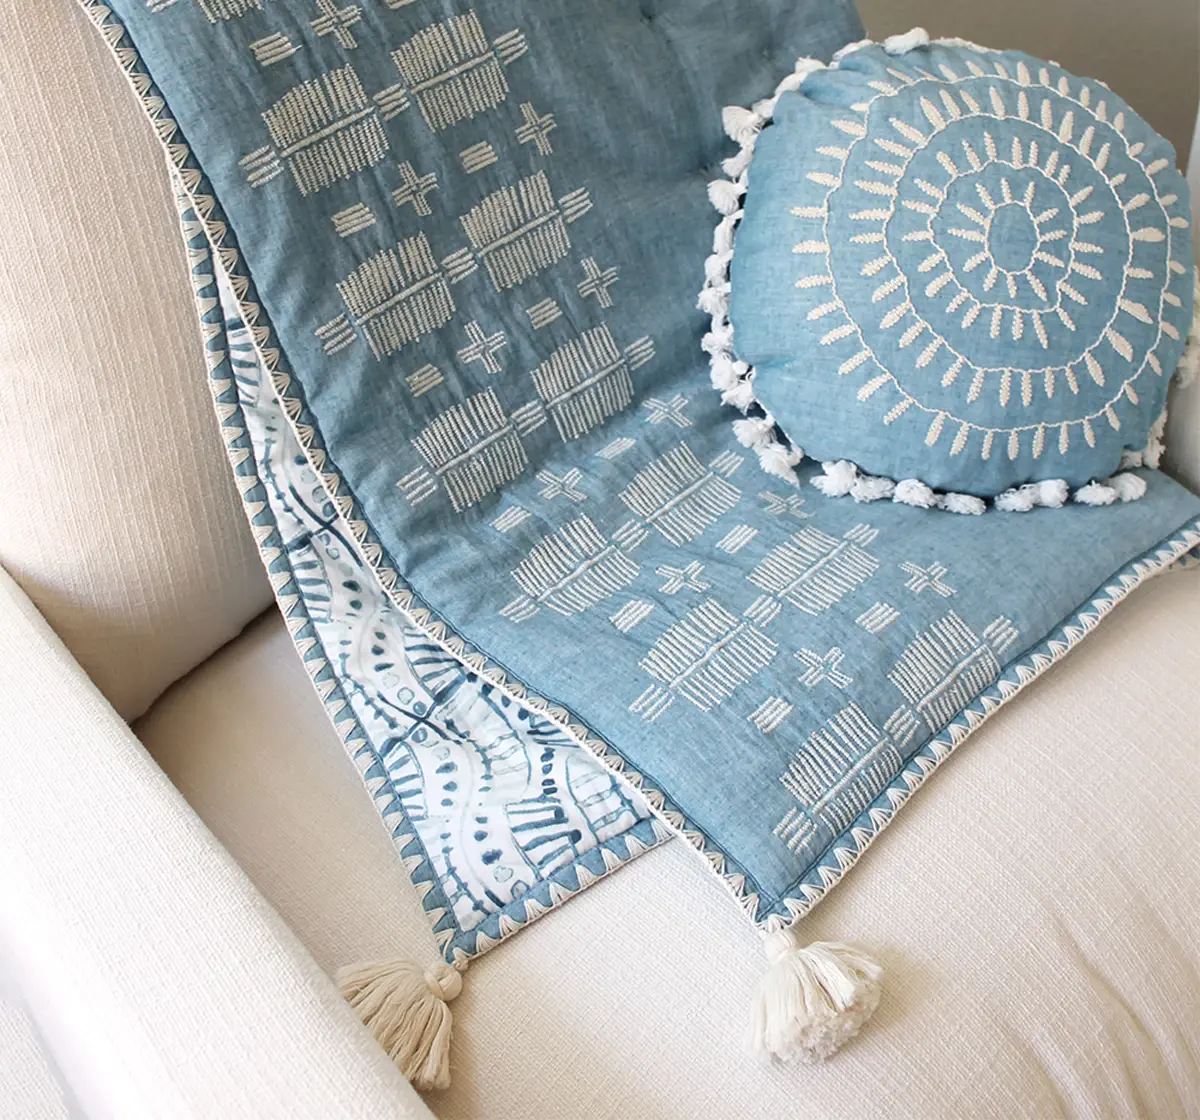 Crane Baby Caspian Collection Round Nursery Decorative Pillow6Y+ Blue